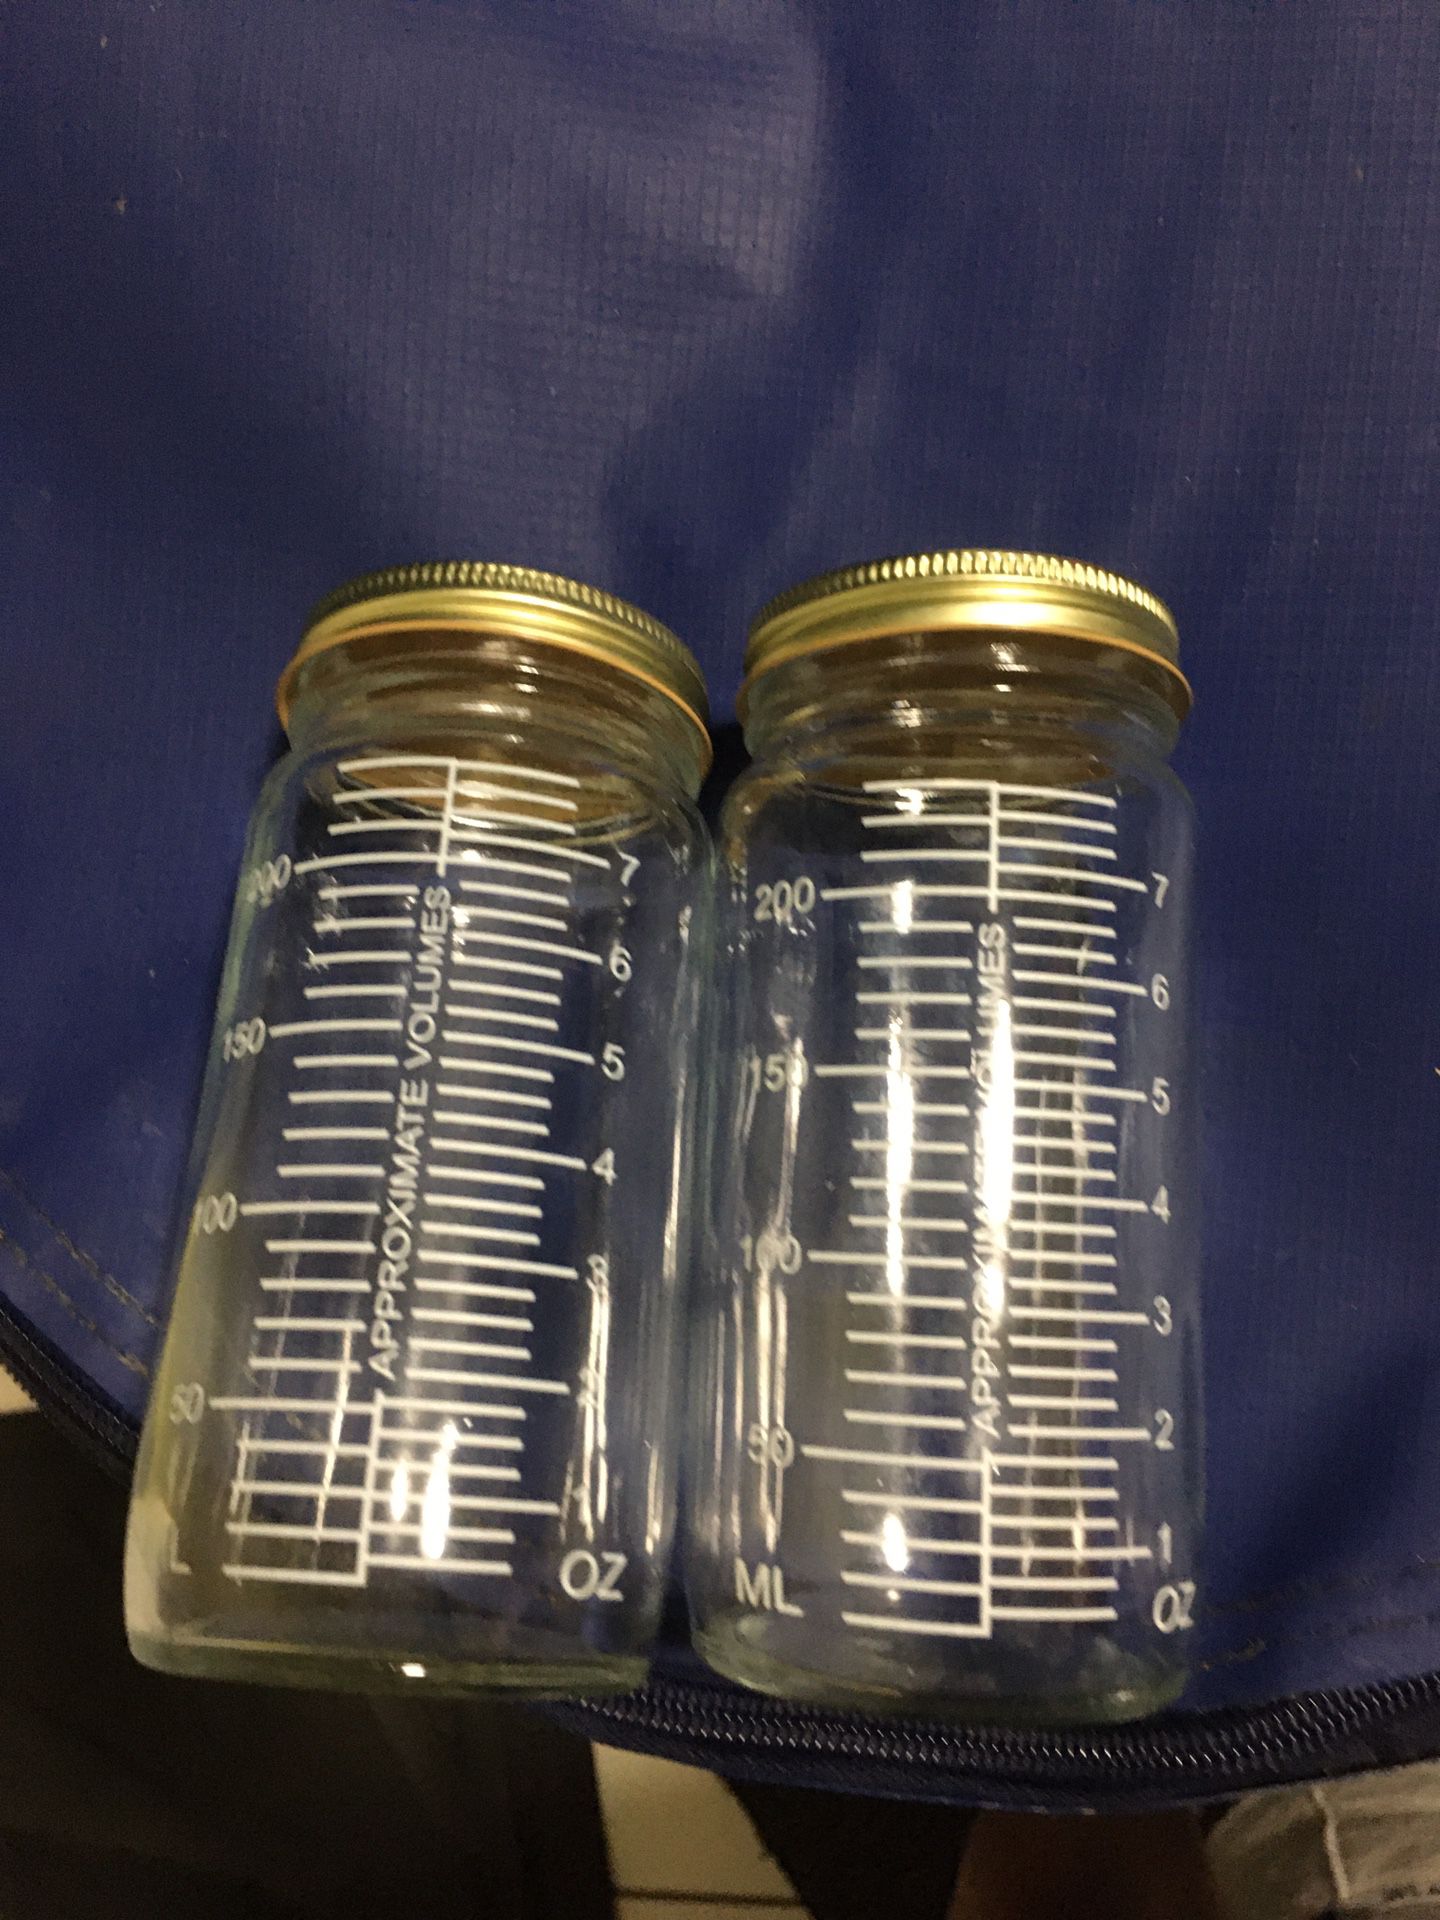 Measuring container mason jar hydroponic